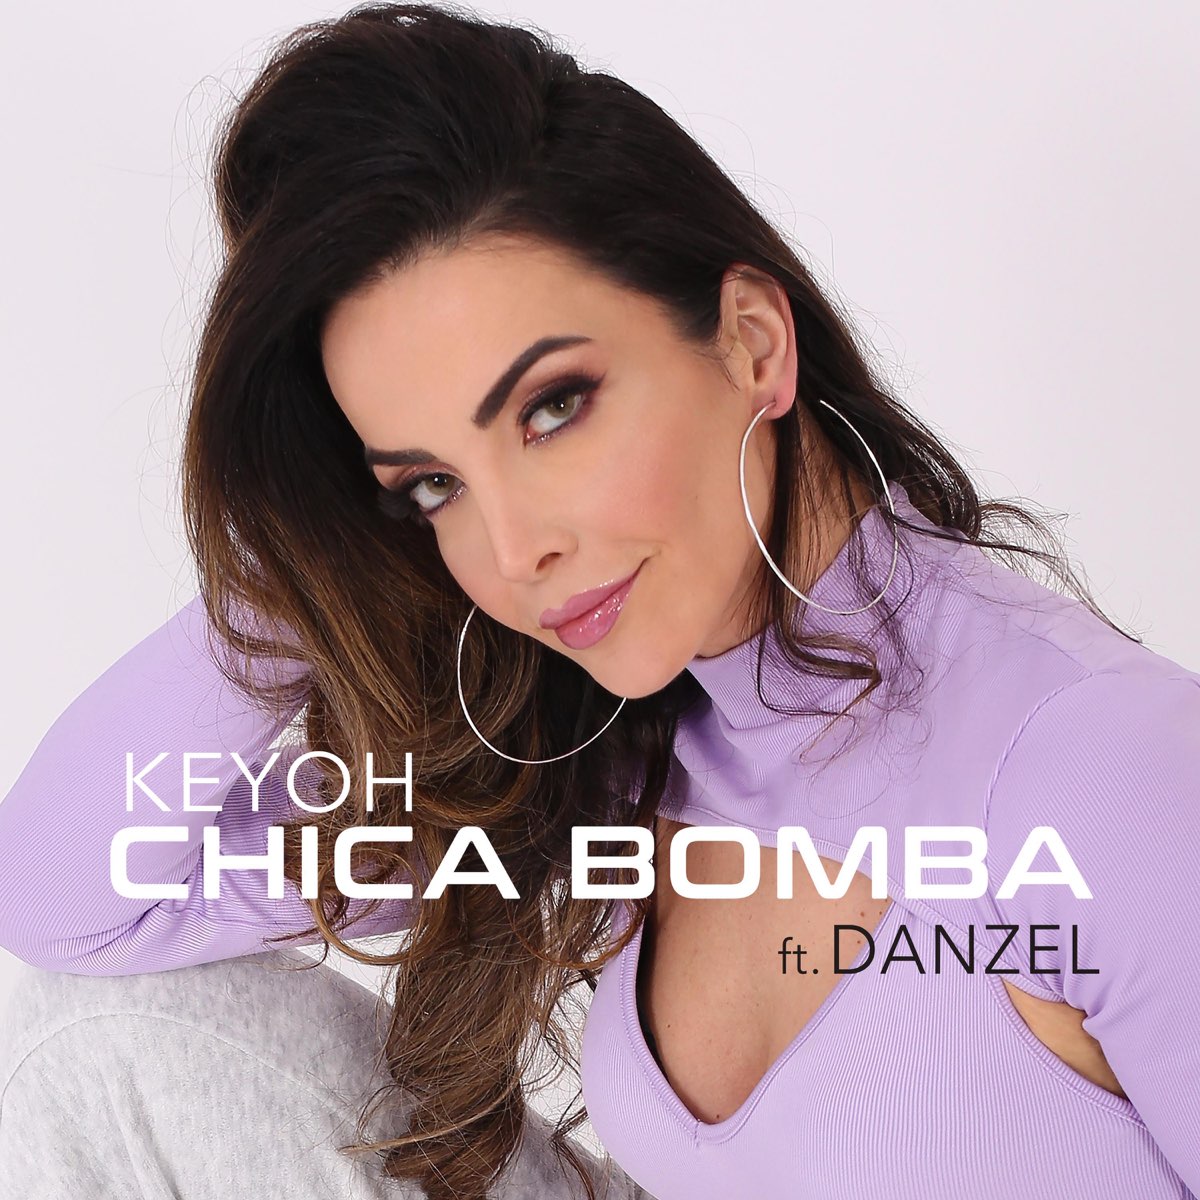 Chica Bomba (feat. Danzel) - Single by Keyoh on Apple Music